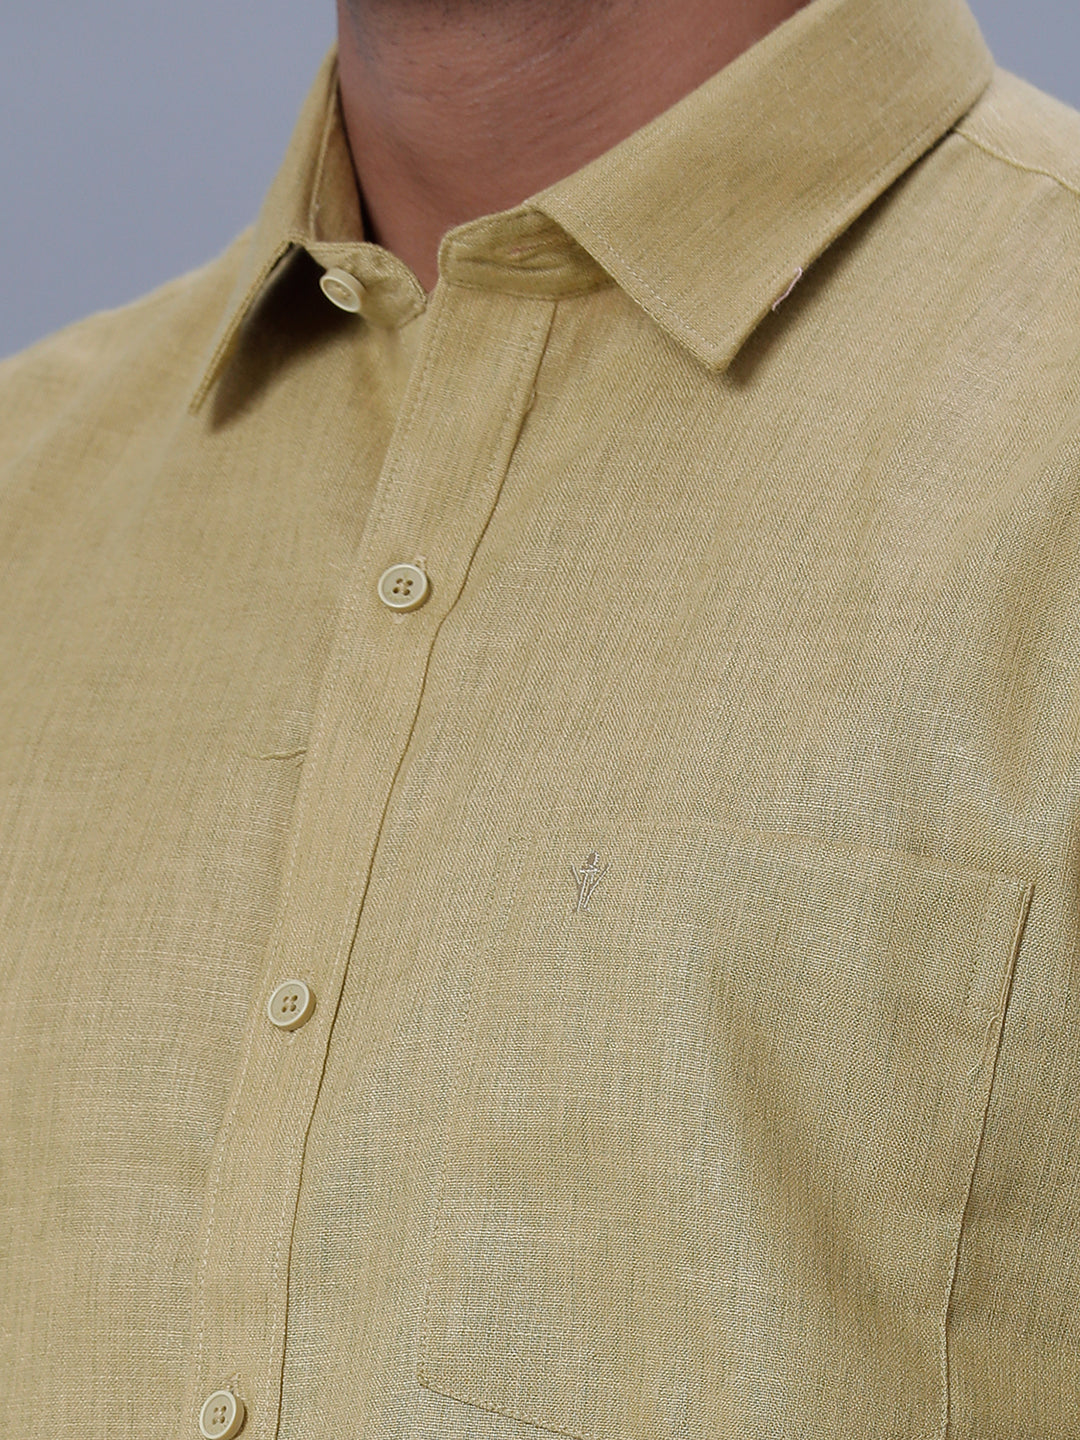 Mens Formal Shirt Full Sleeves Chutney Green T26 TB1-Zoom view